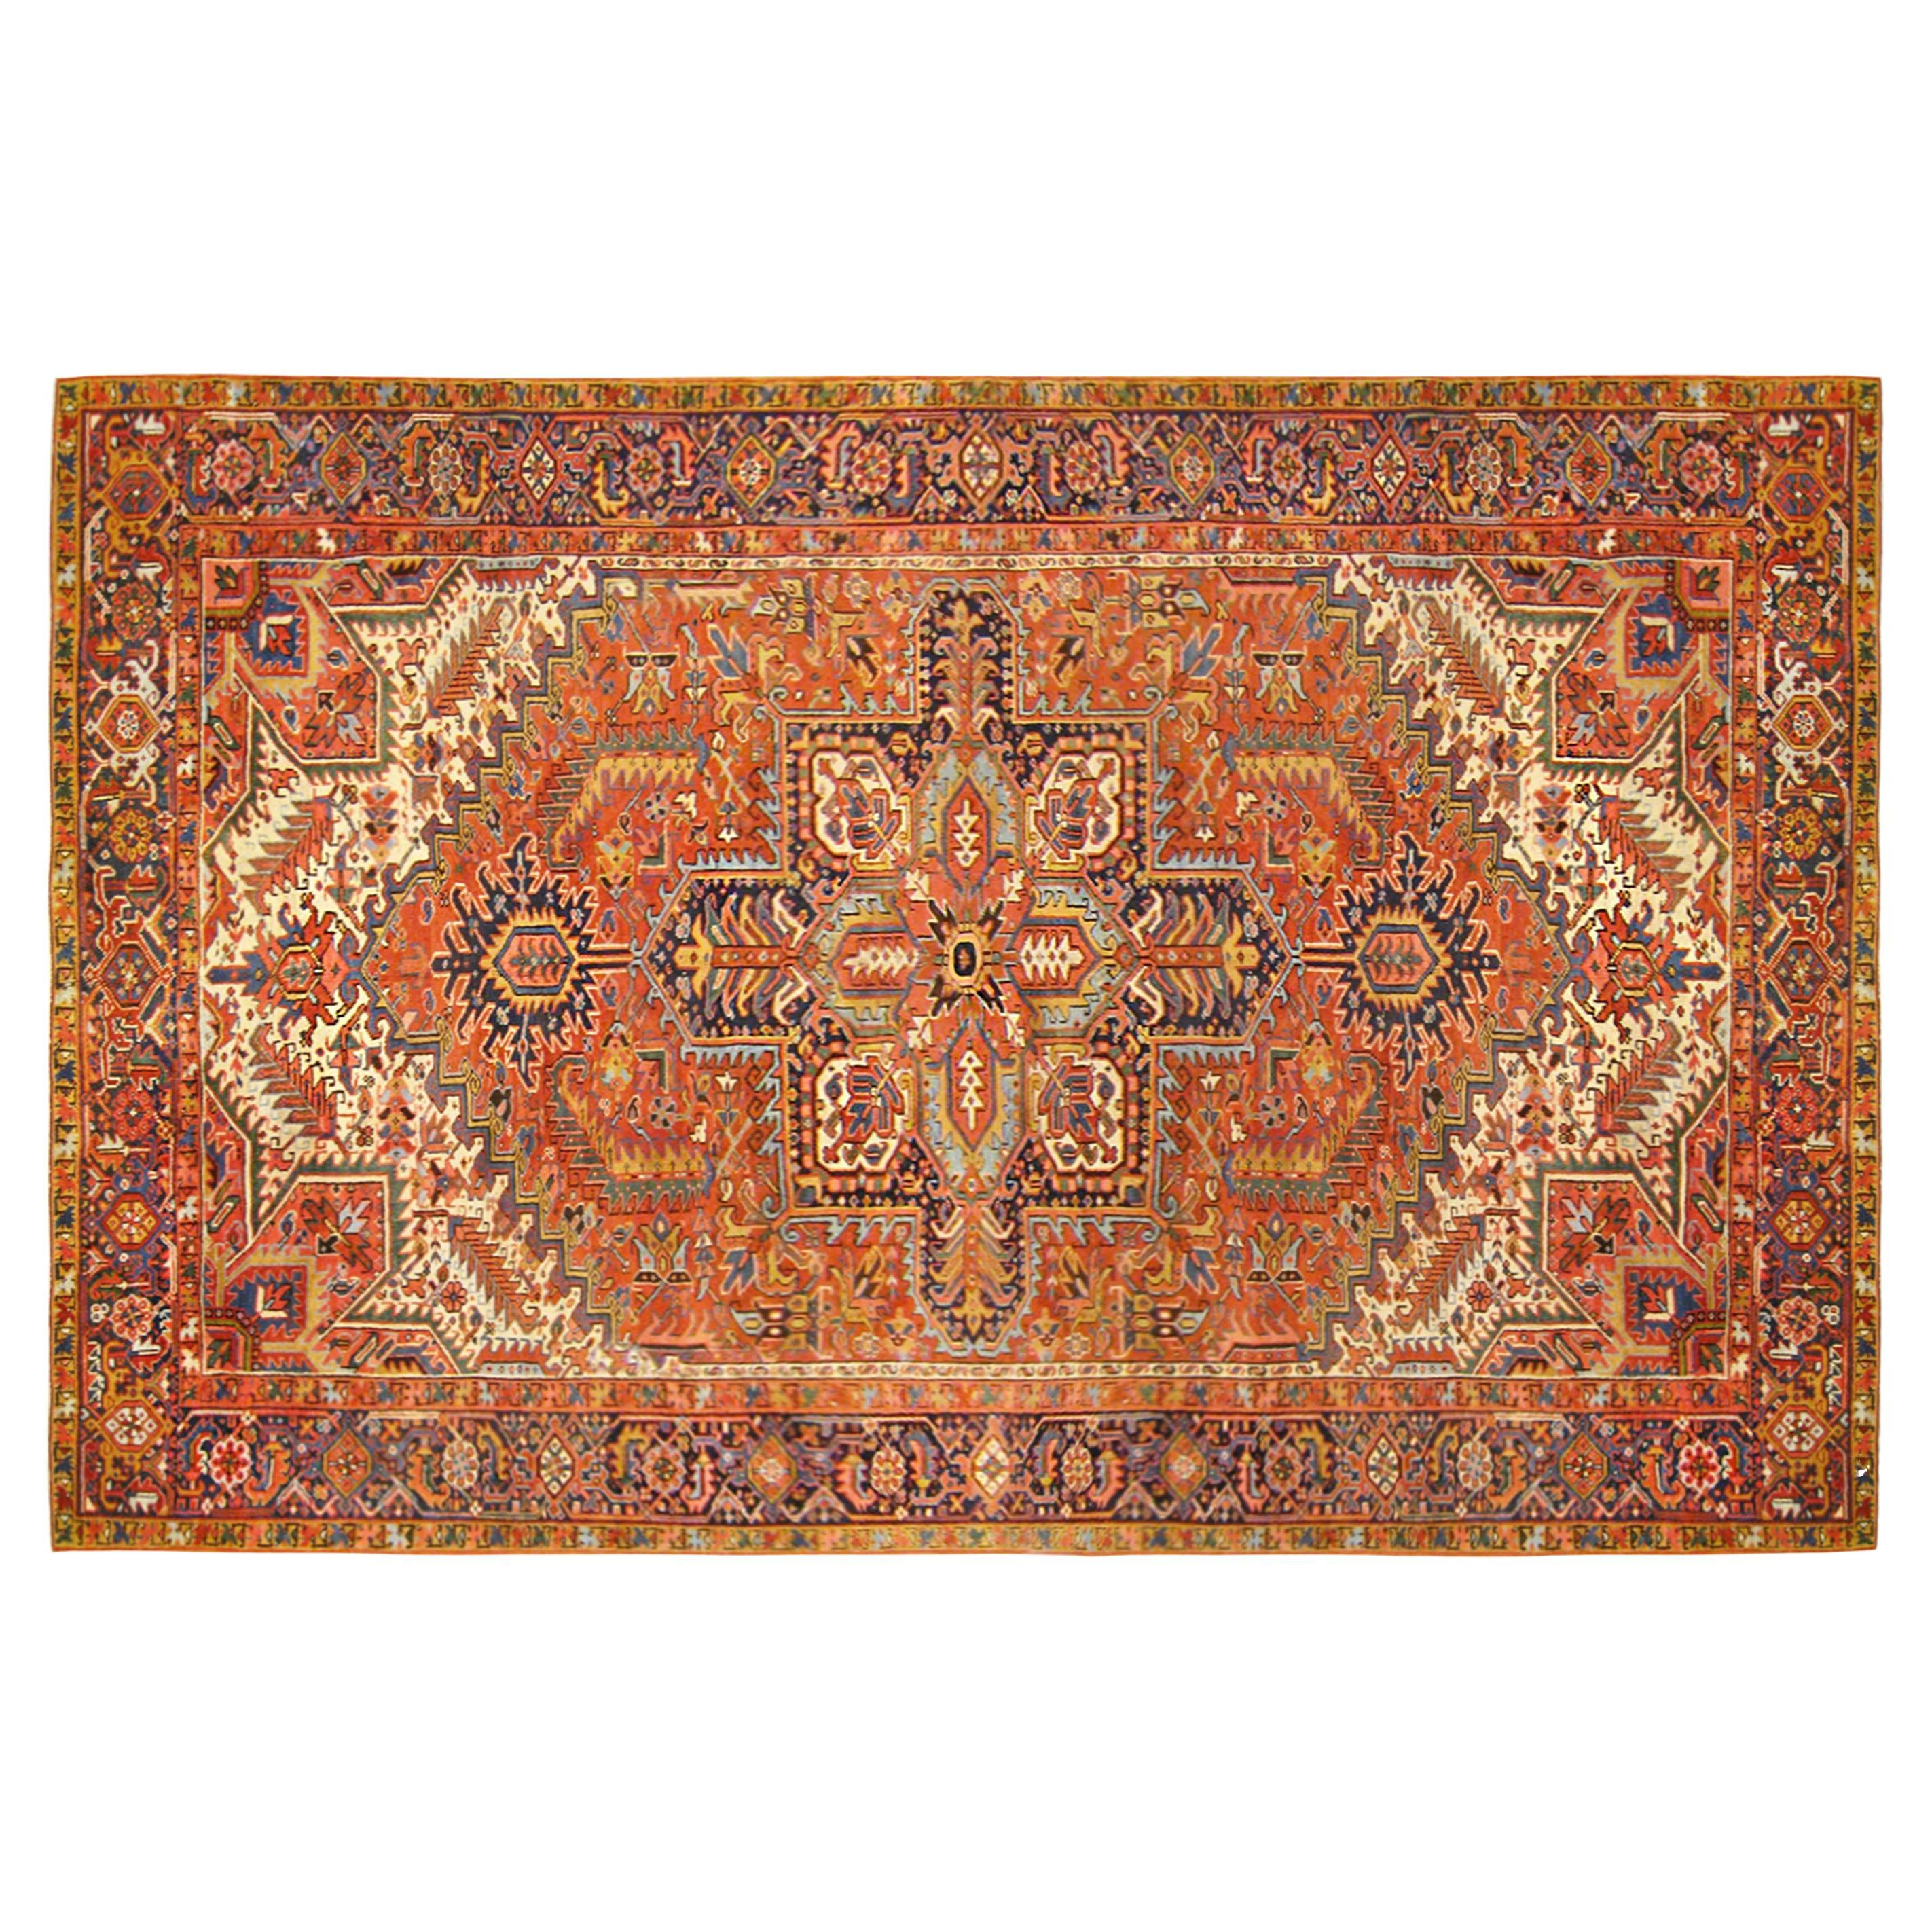 Antique Persian Decorative Oriental Heriz Rug in Room Size